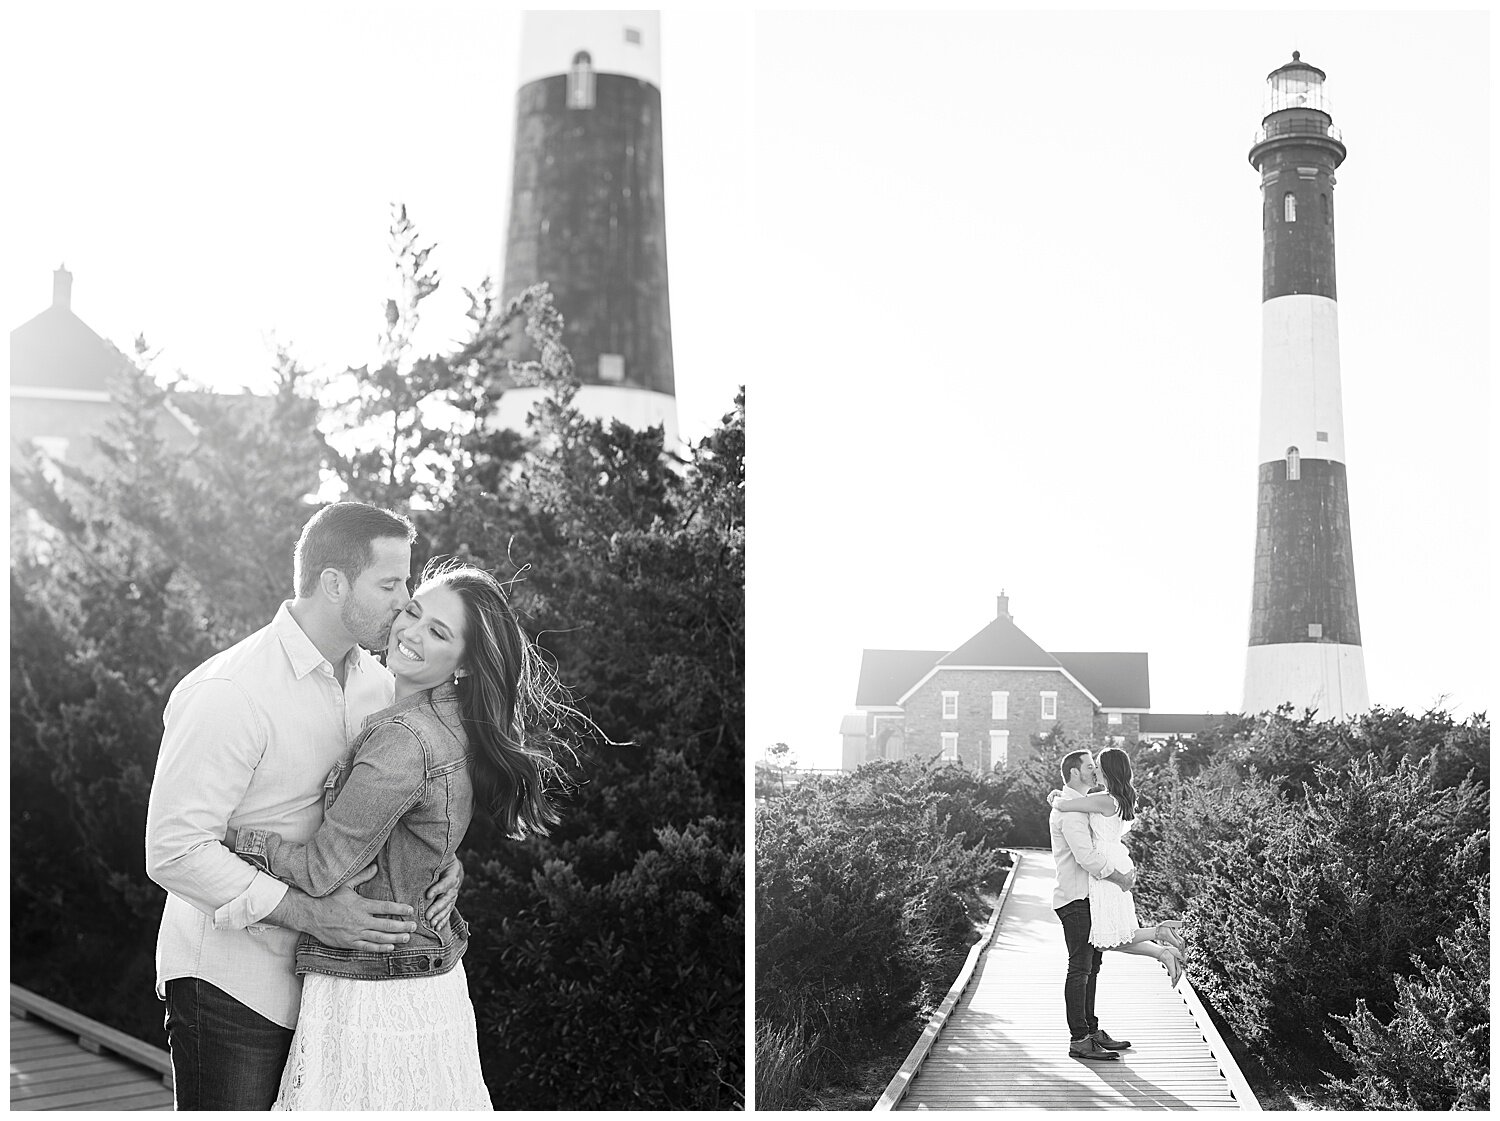 Fire-Island-Lighthouse-Engagement-Photography-Apollo-Fields-Robert-Moses-Beach-09.jpg